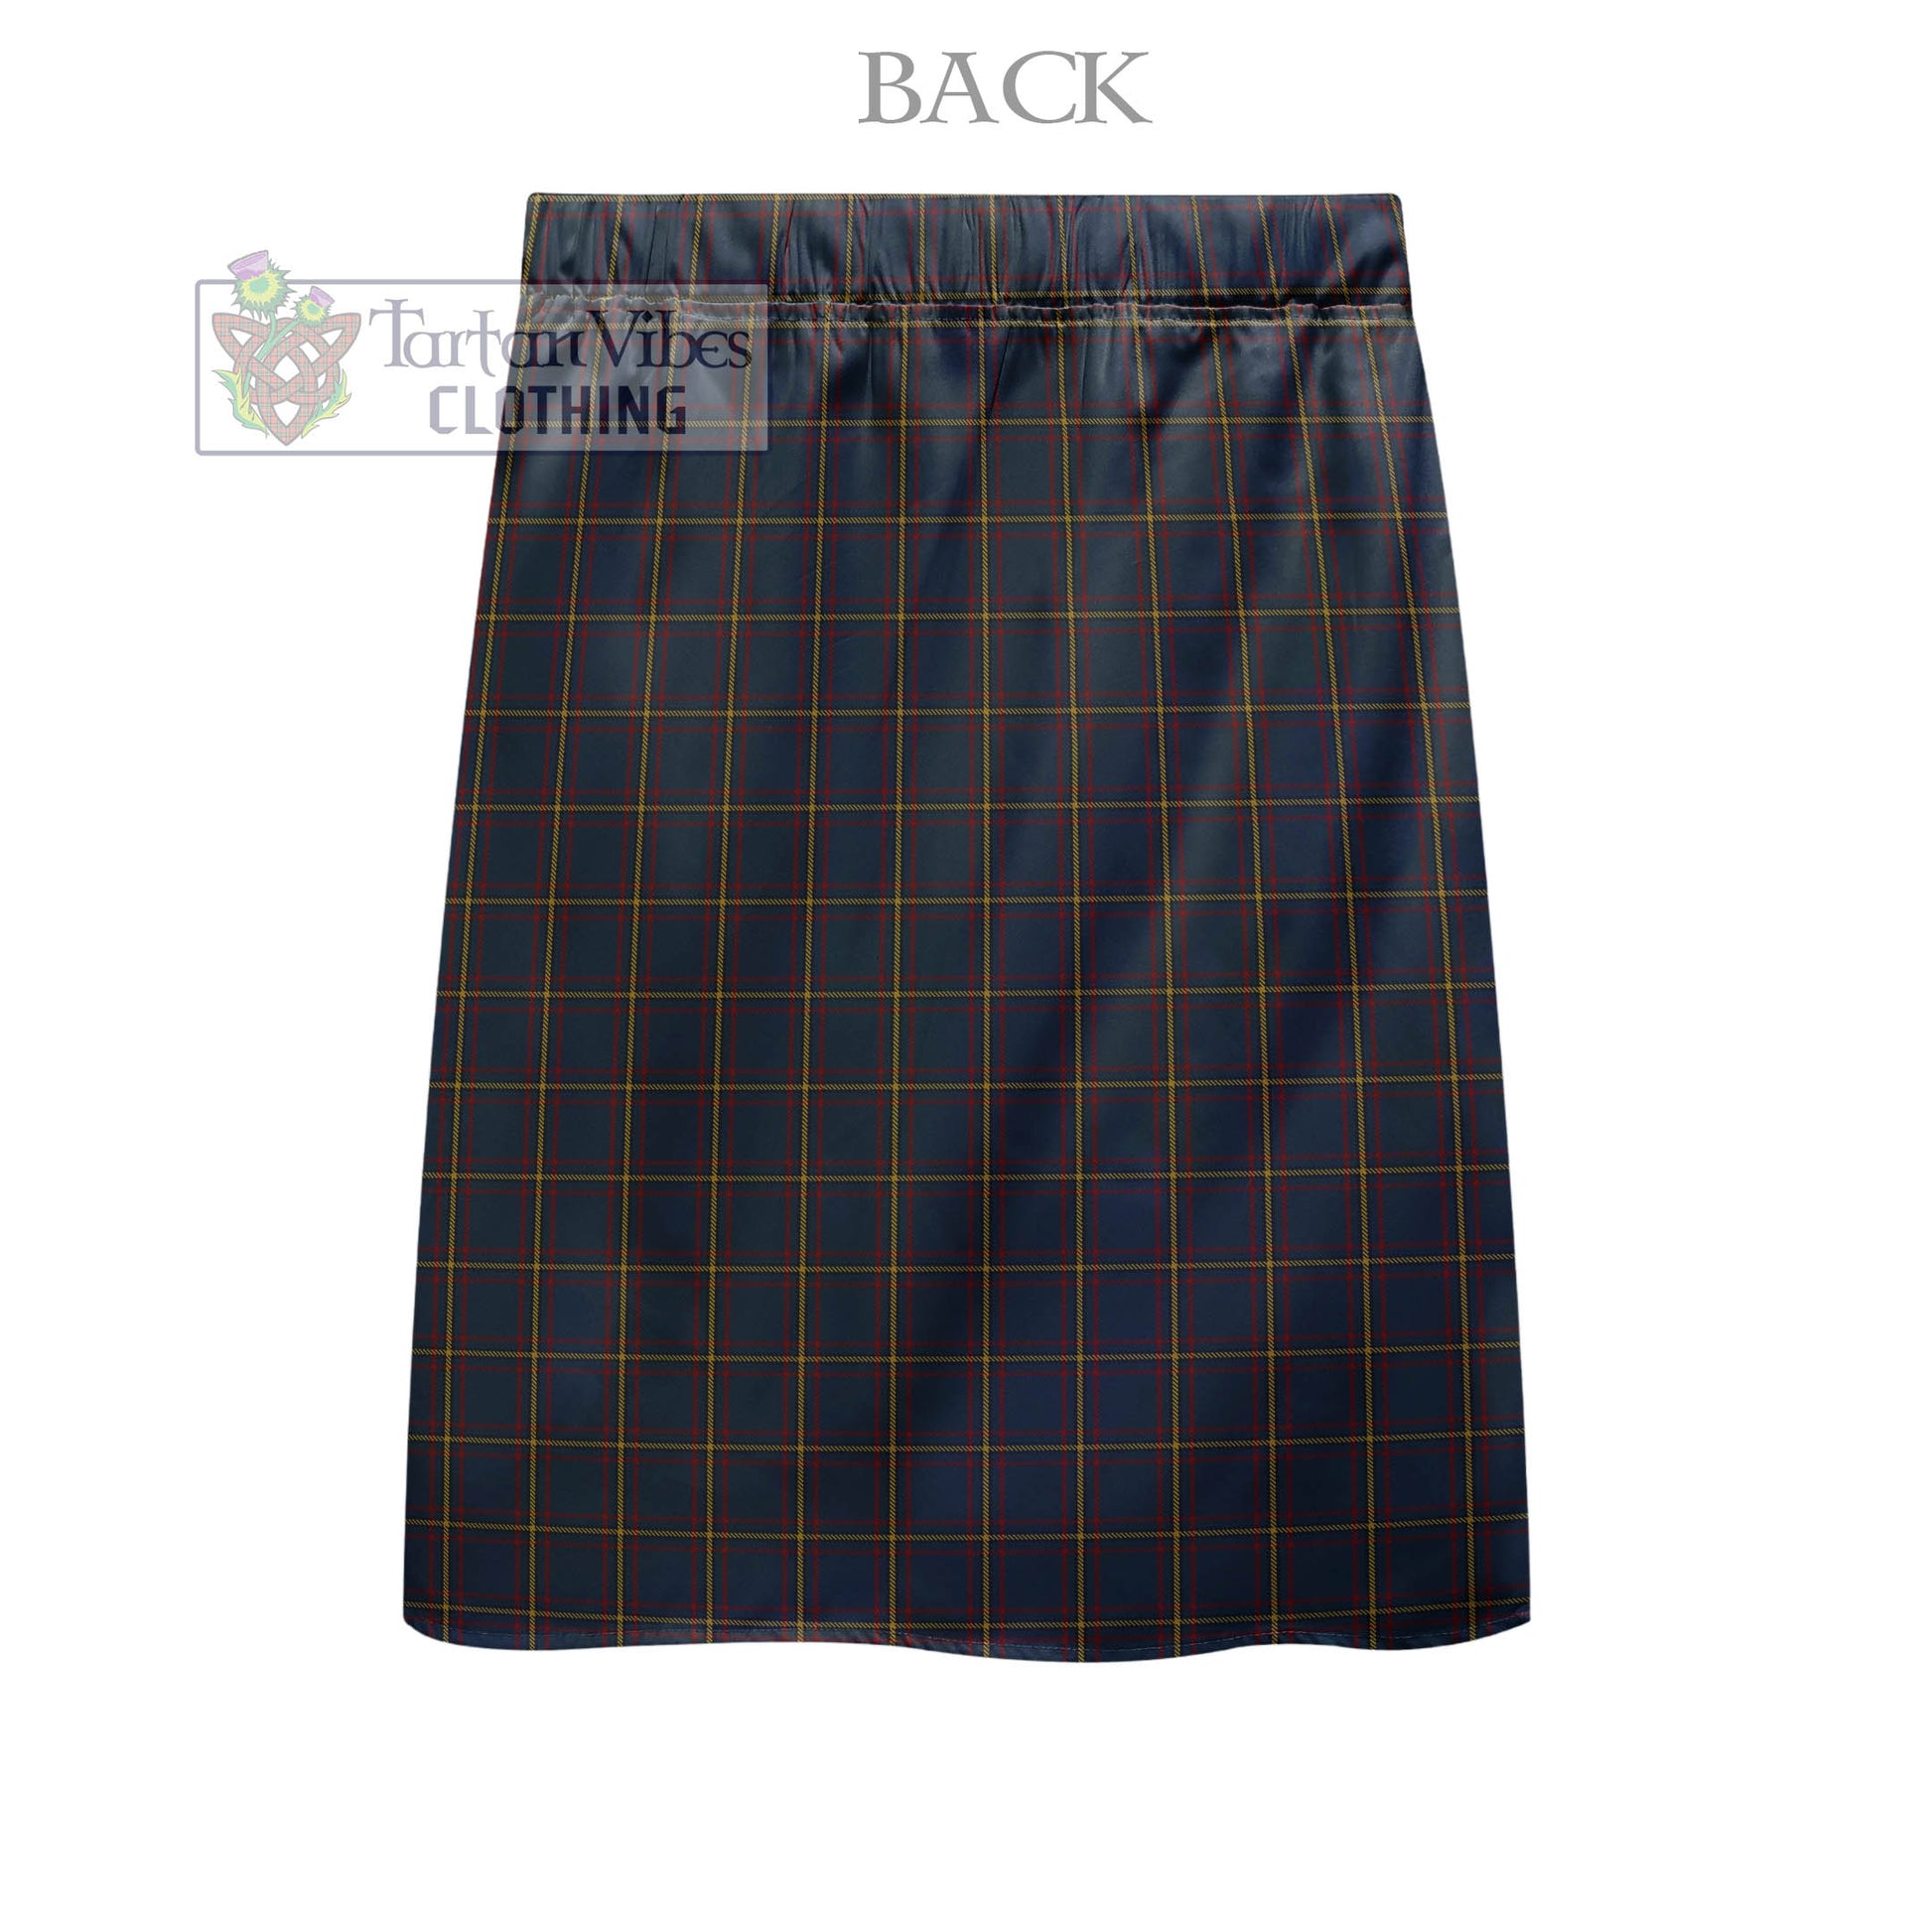 Tartan Vibes Clothing MacLaine of Lochbuie Hunting Tartan Men's Pleated Skirt - Fashion Casual Retro Scottish Style